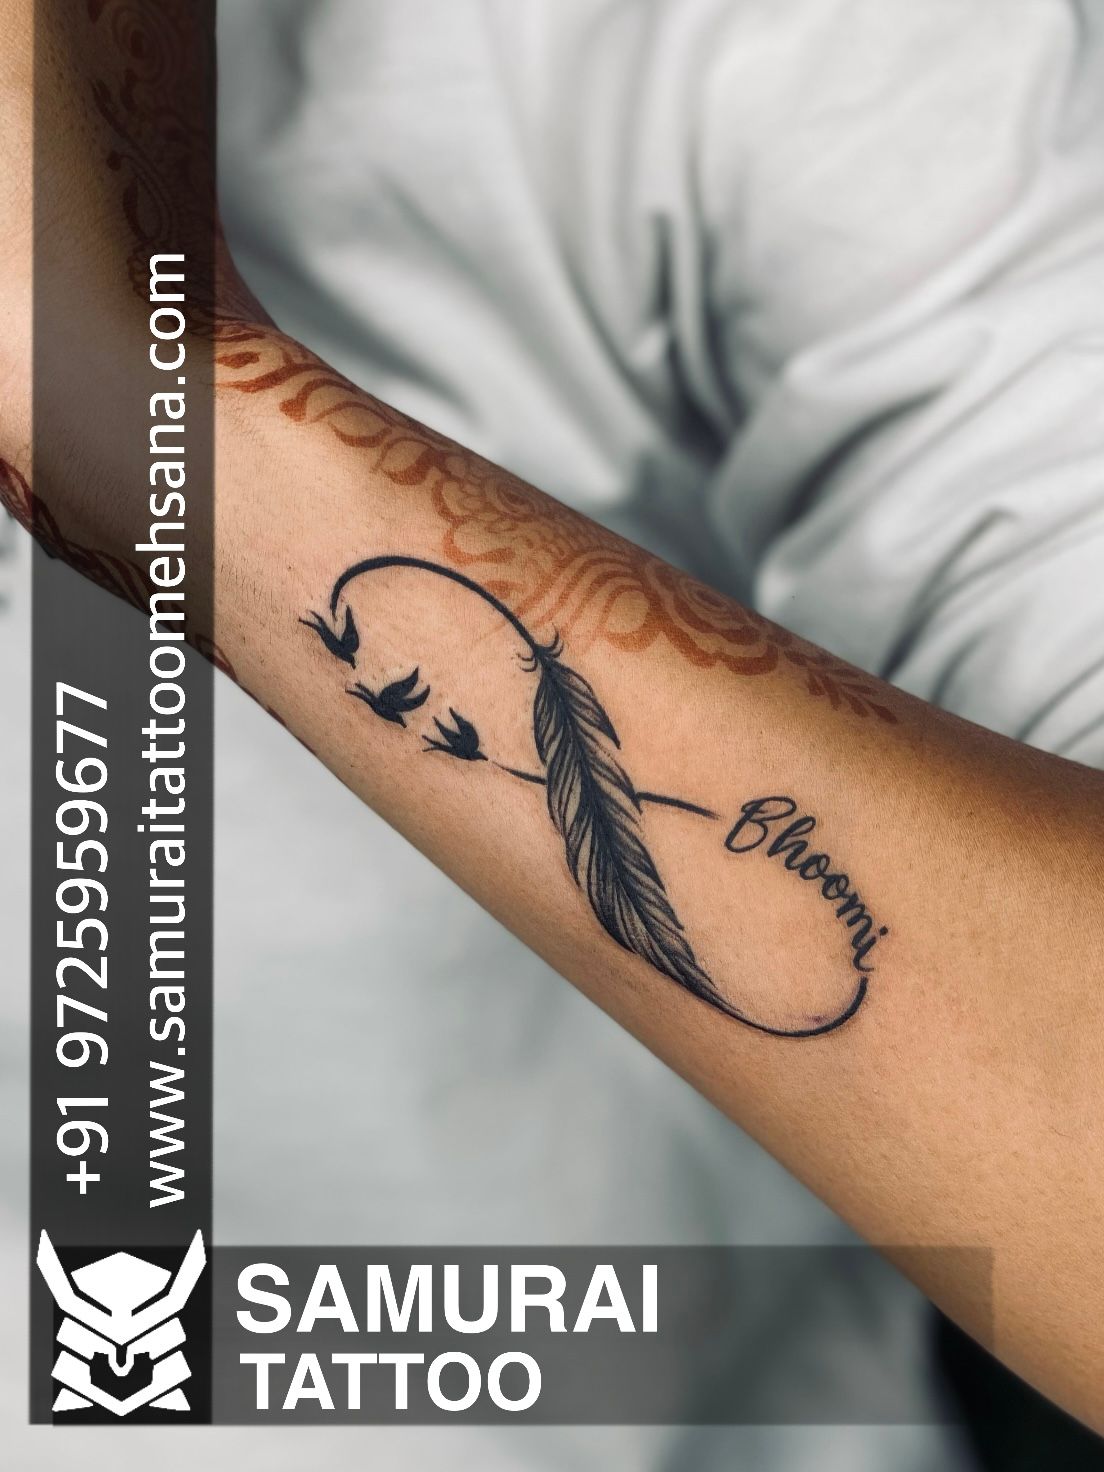 dream infinity tattoo - Design of TattoosDesign of Tattoos